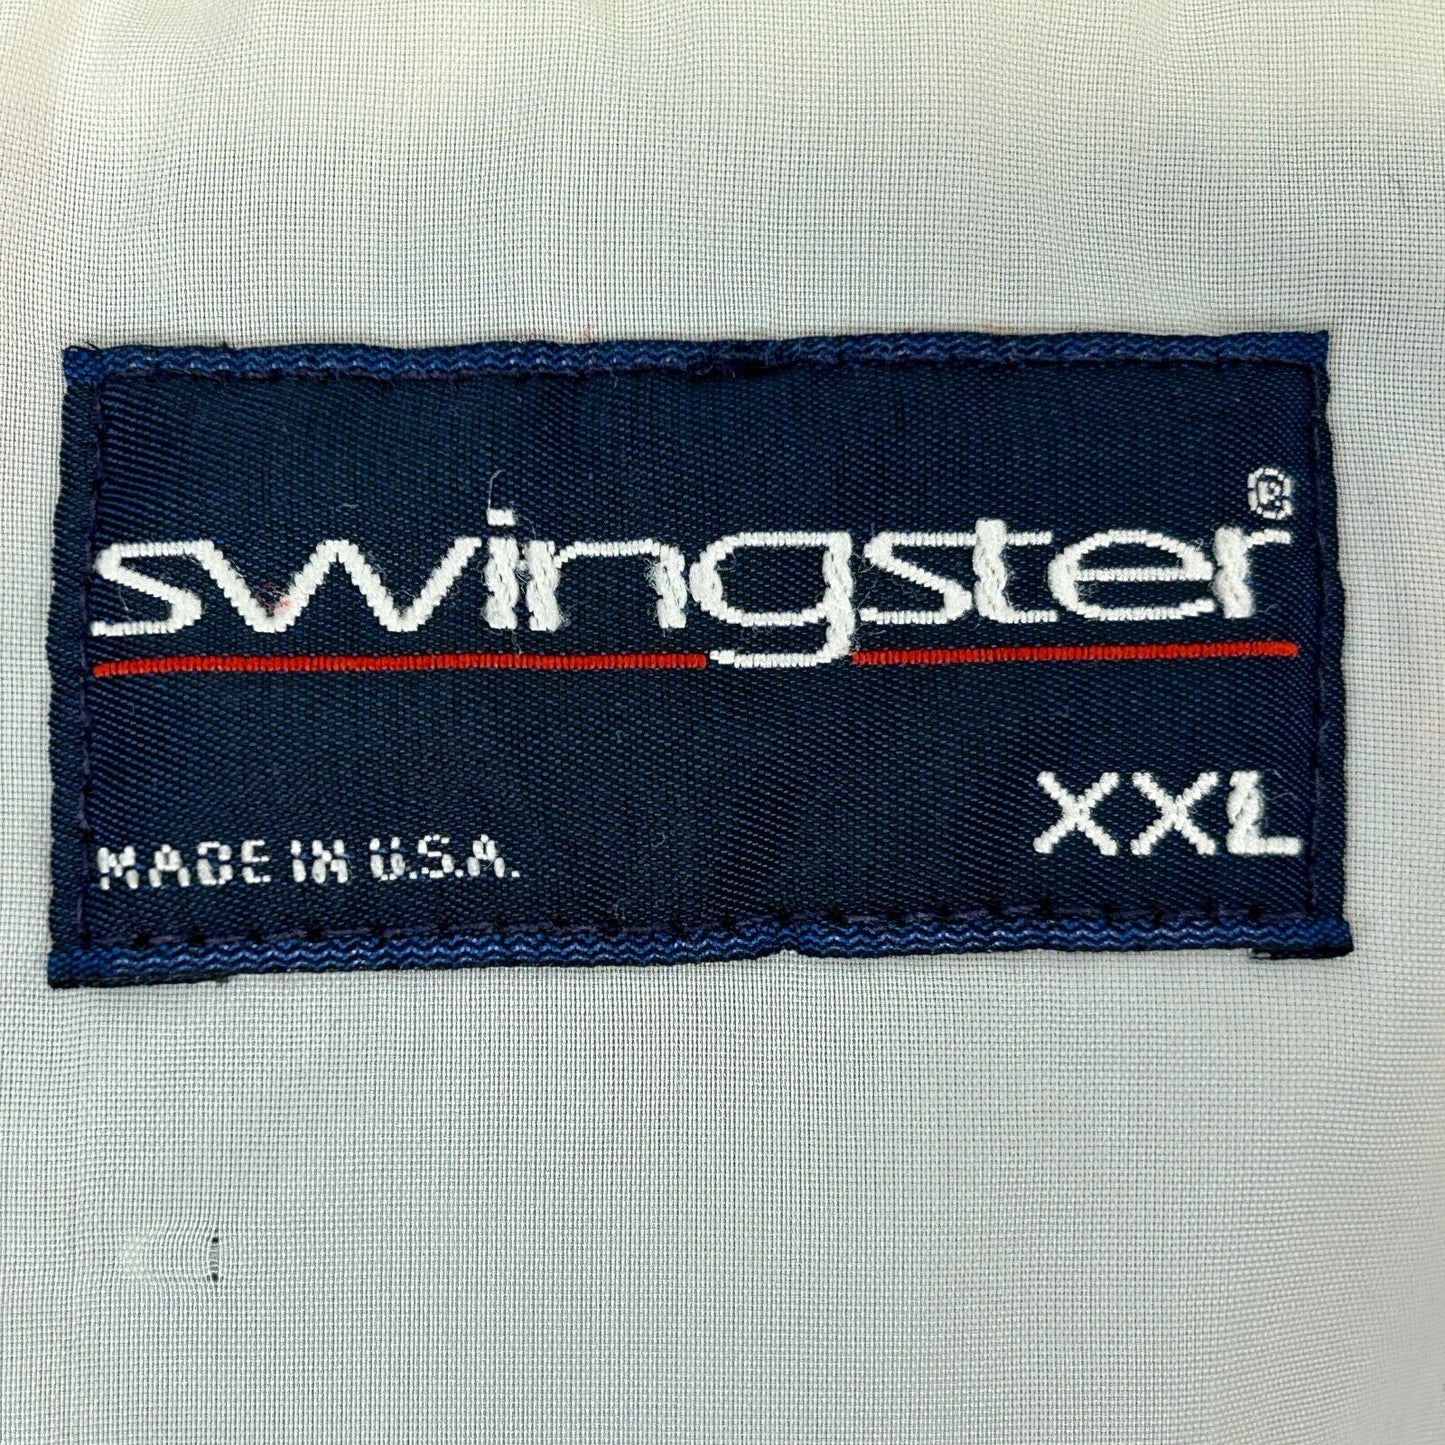 Masterchem USA Olympics Vintage 90s Jacket American Flag Patriotic Swingster XXL